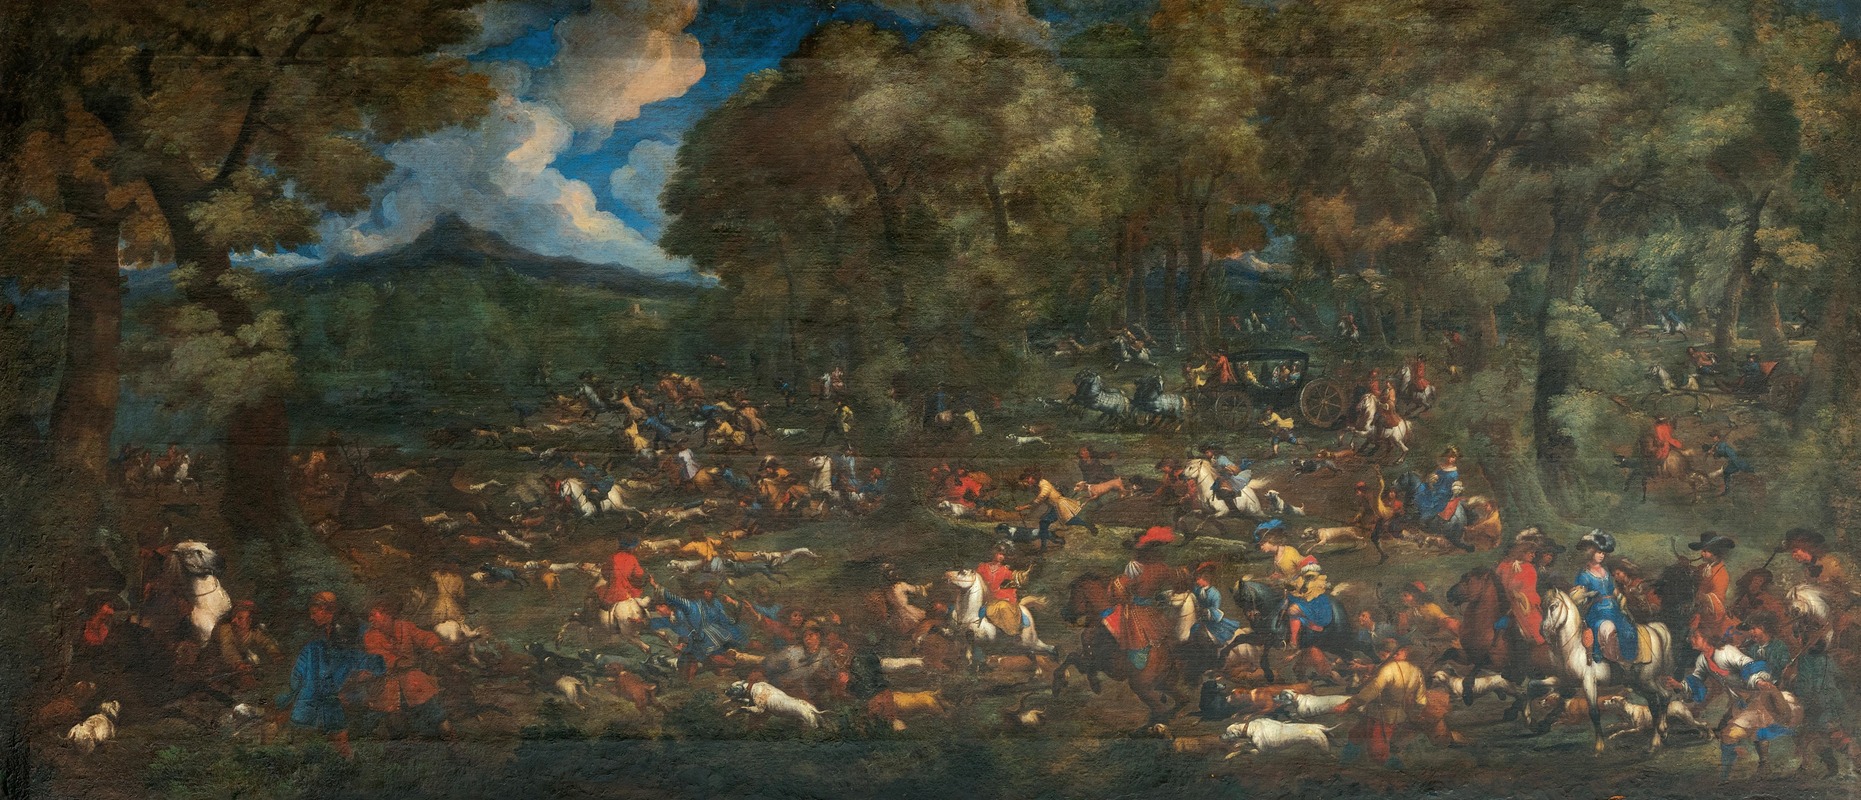 Circle of Adam Frans van der Meulen - Elegant figures on horseback and in carriages following a hunt